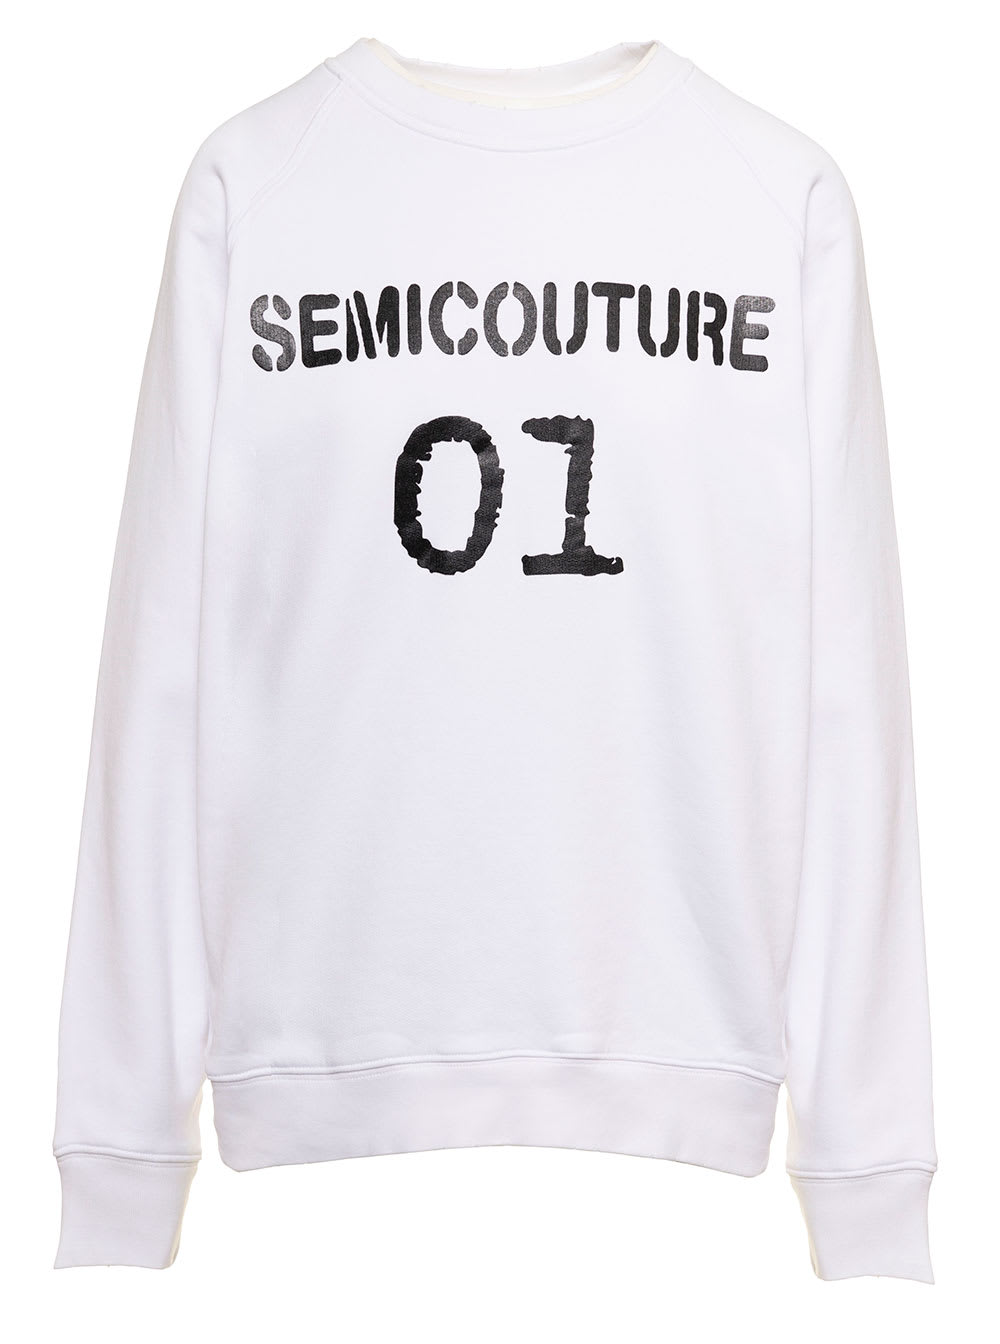 SEMICOUTURE White Cotton Woman Sweatshirt With Semocouture Logo Print